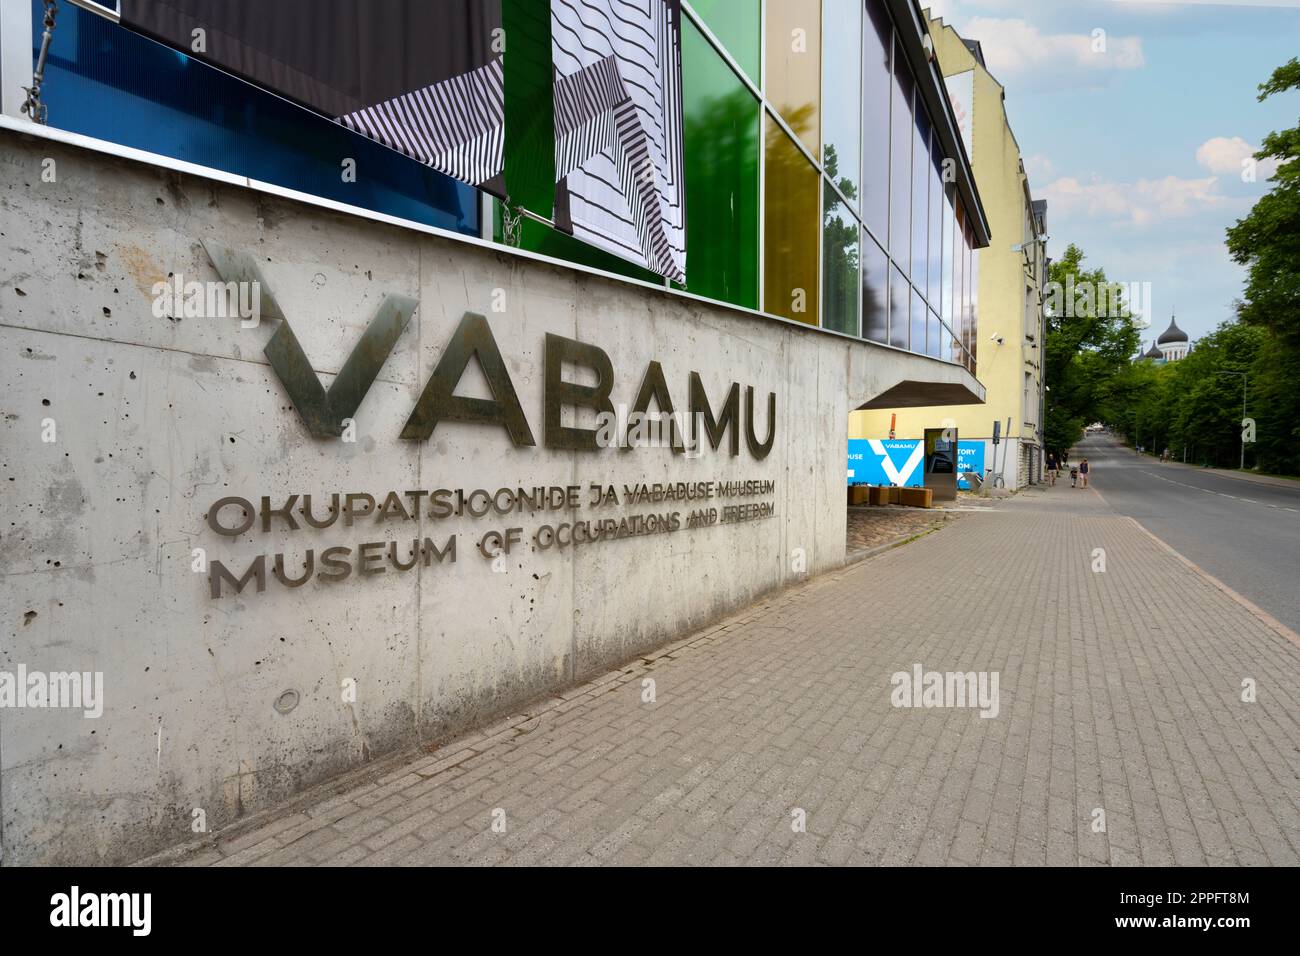 Vabamu Museum of Occupations and Freedom in Tallinn, Estonia. Stock Photo